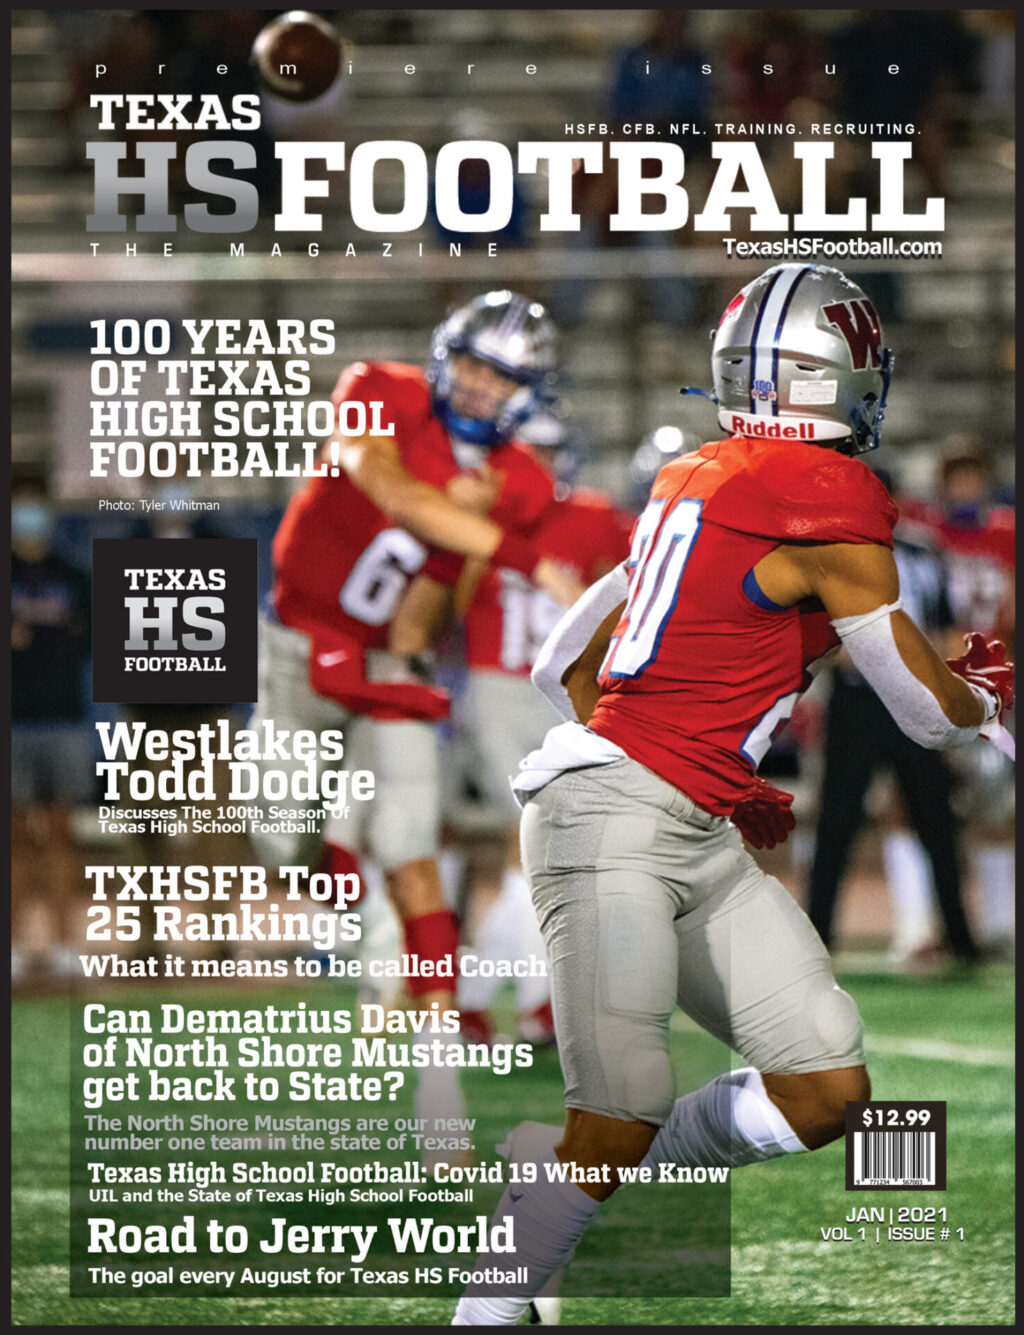 Texas High School Football Magazine Now on Sale Get it Here Texas